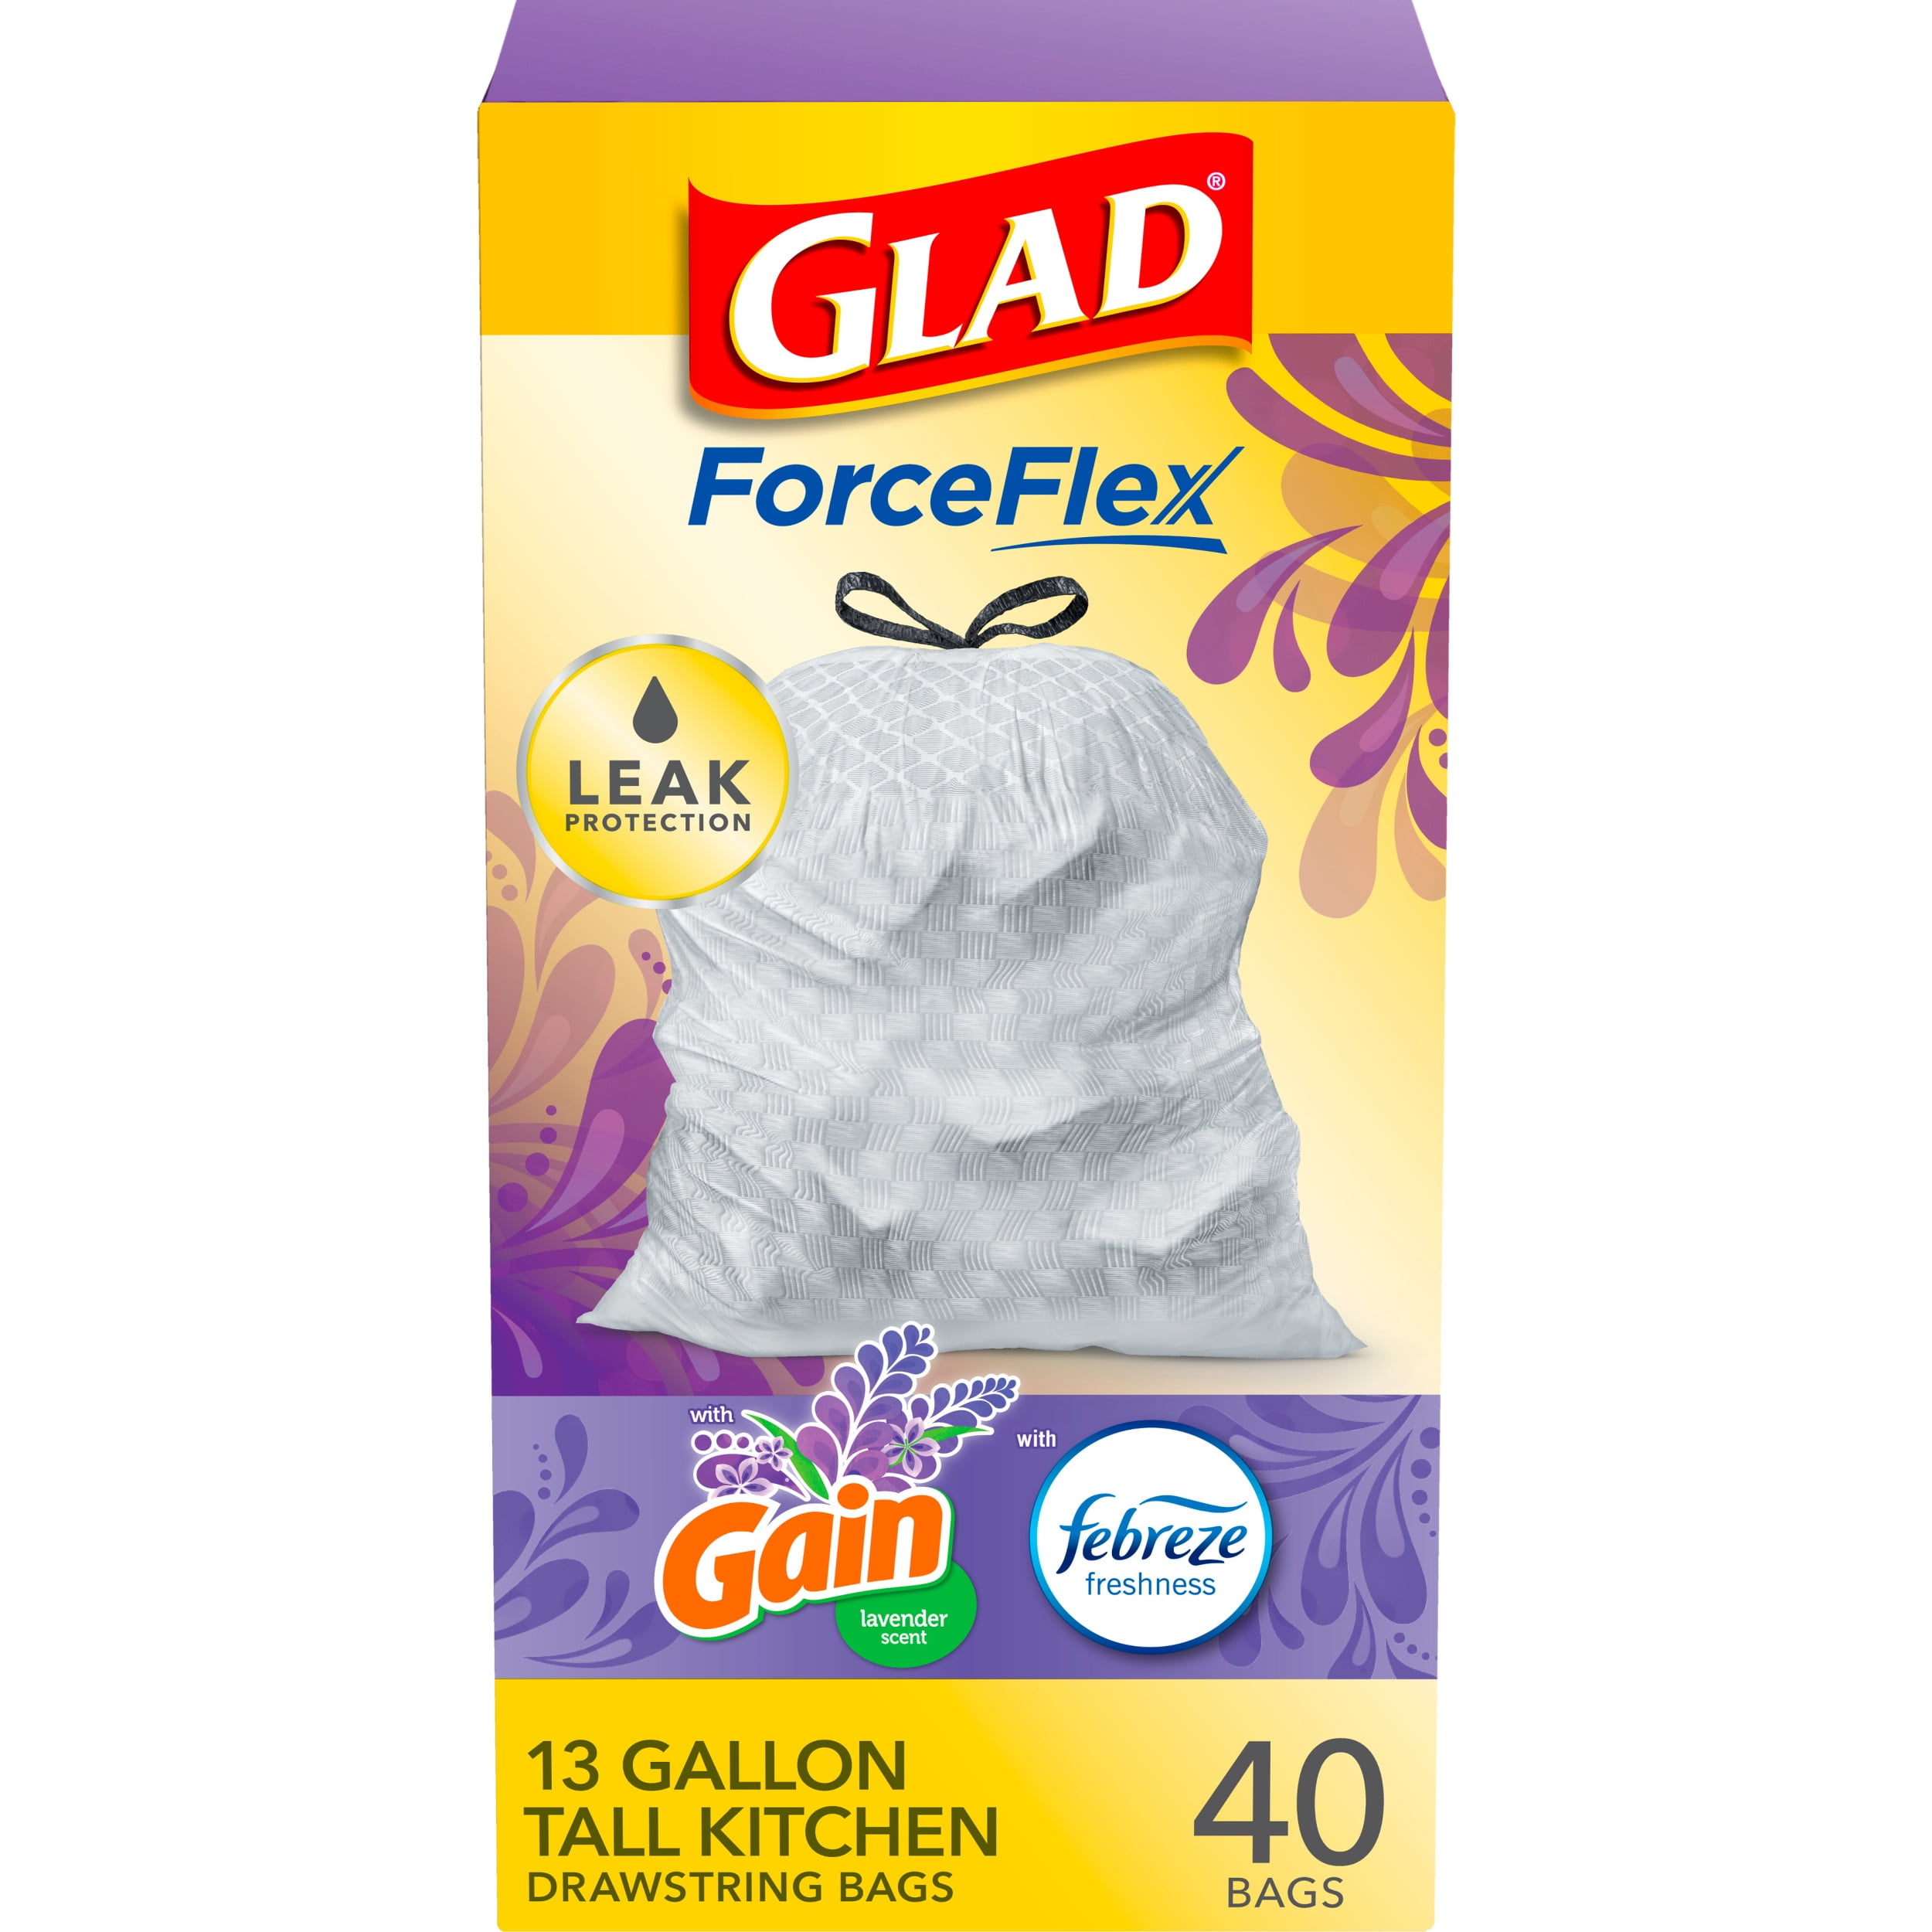 Glad ForceFlexPlus 13 Gallon Tall Kitchen Trash Bags, Gain Lavender with  Febreze, 40 Count 